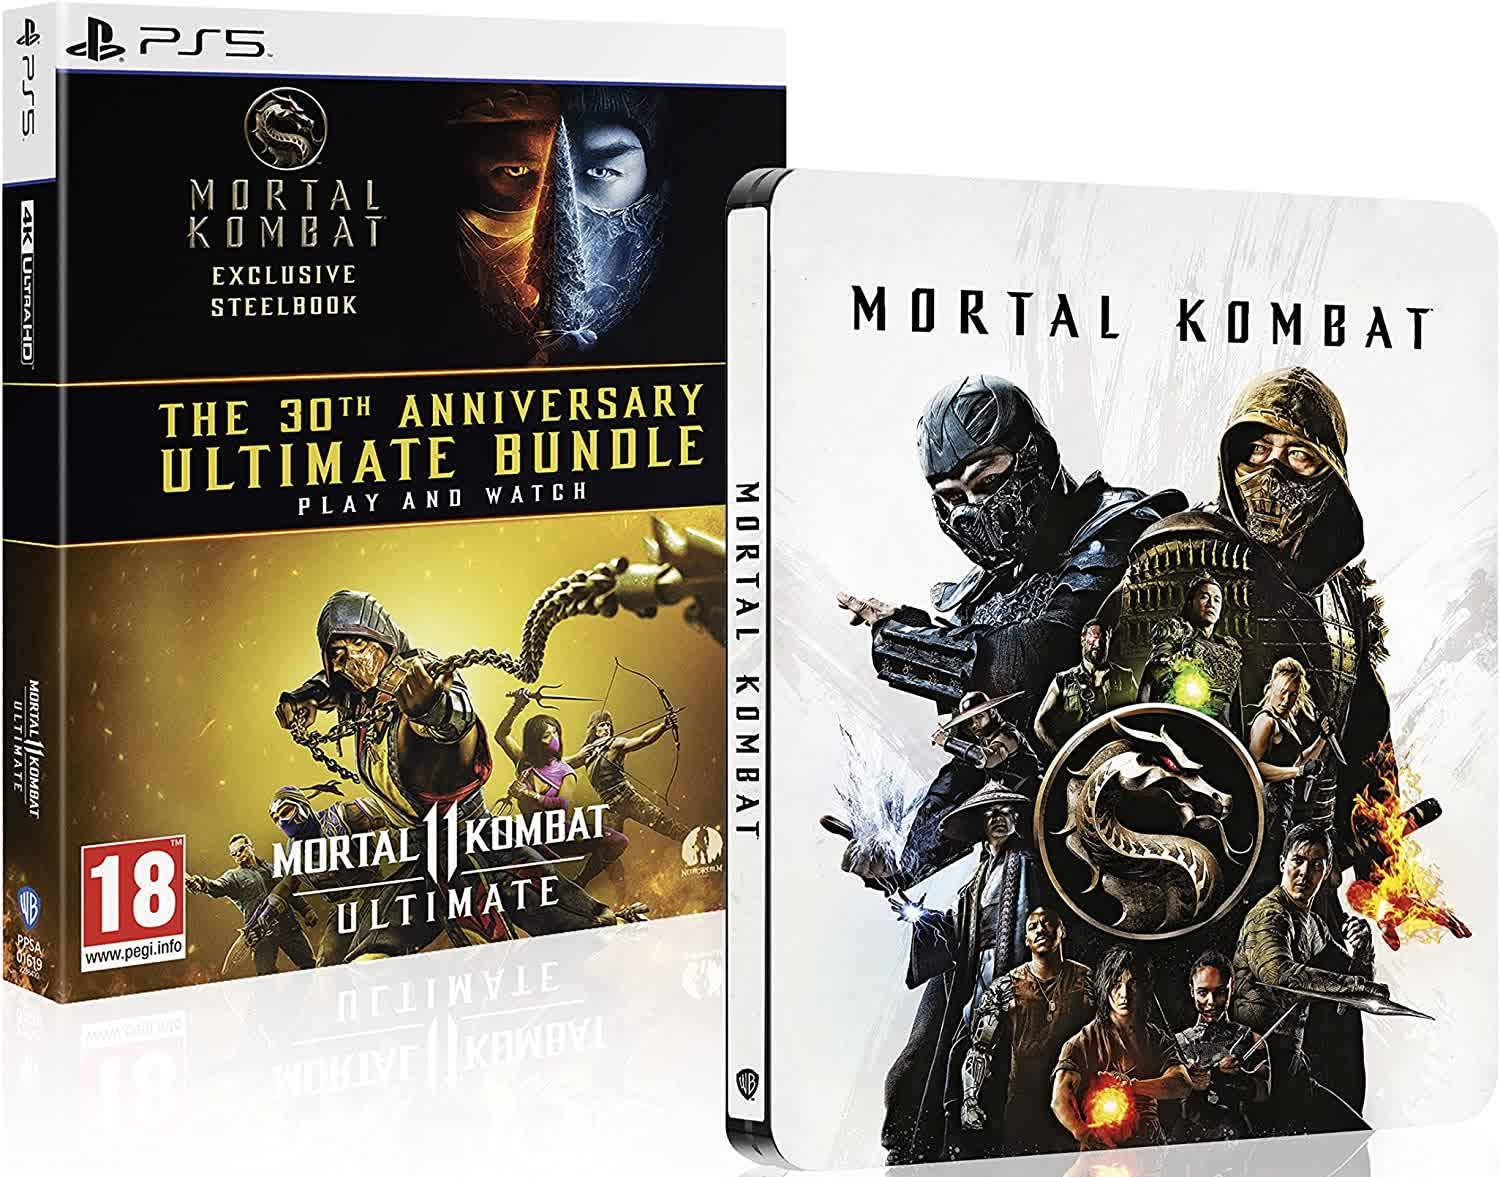 Mortal Kombat 30th anniversary bundle is shaping up to be a nothingburger